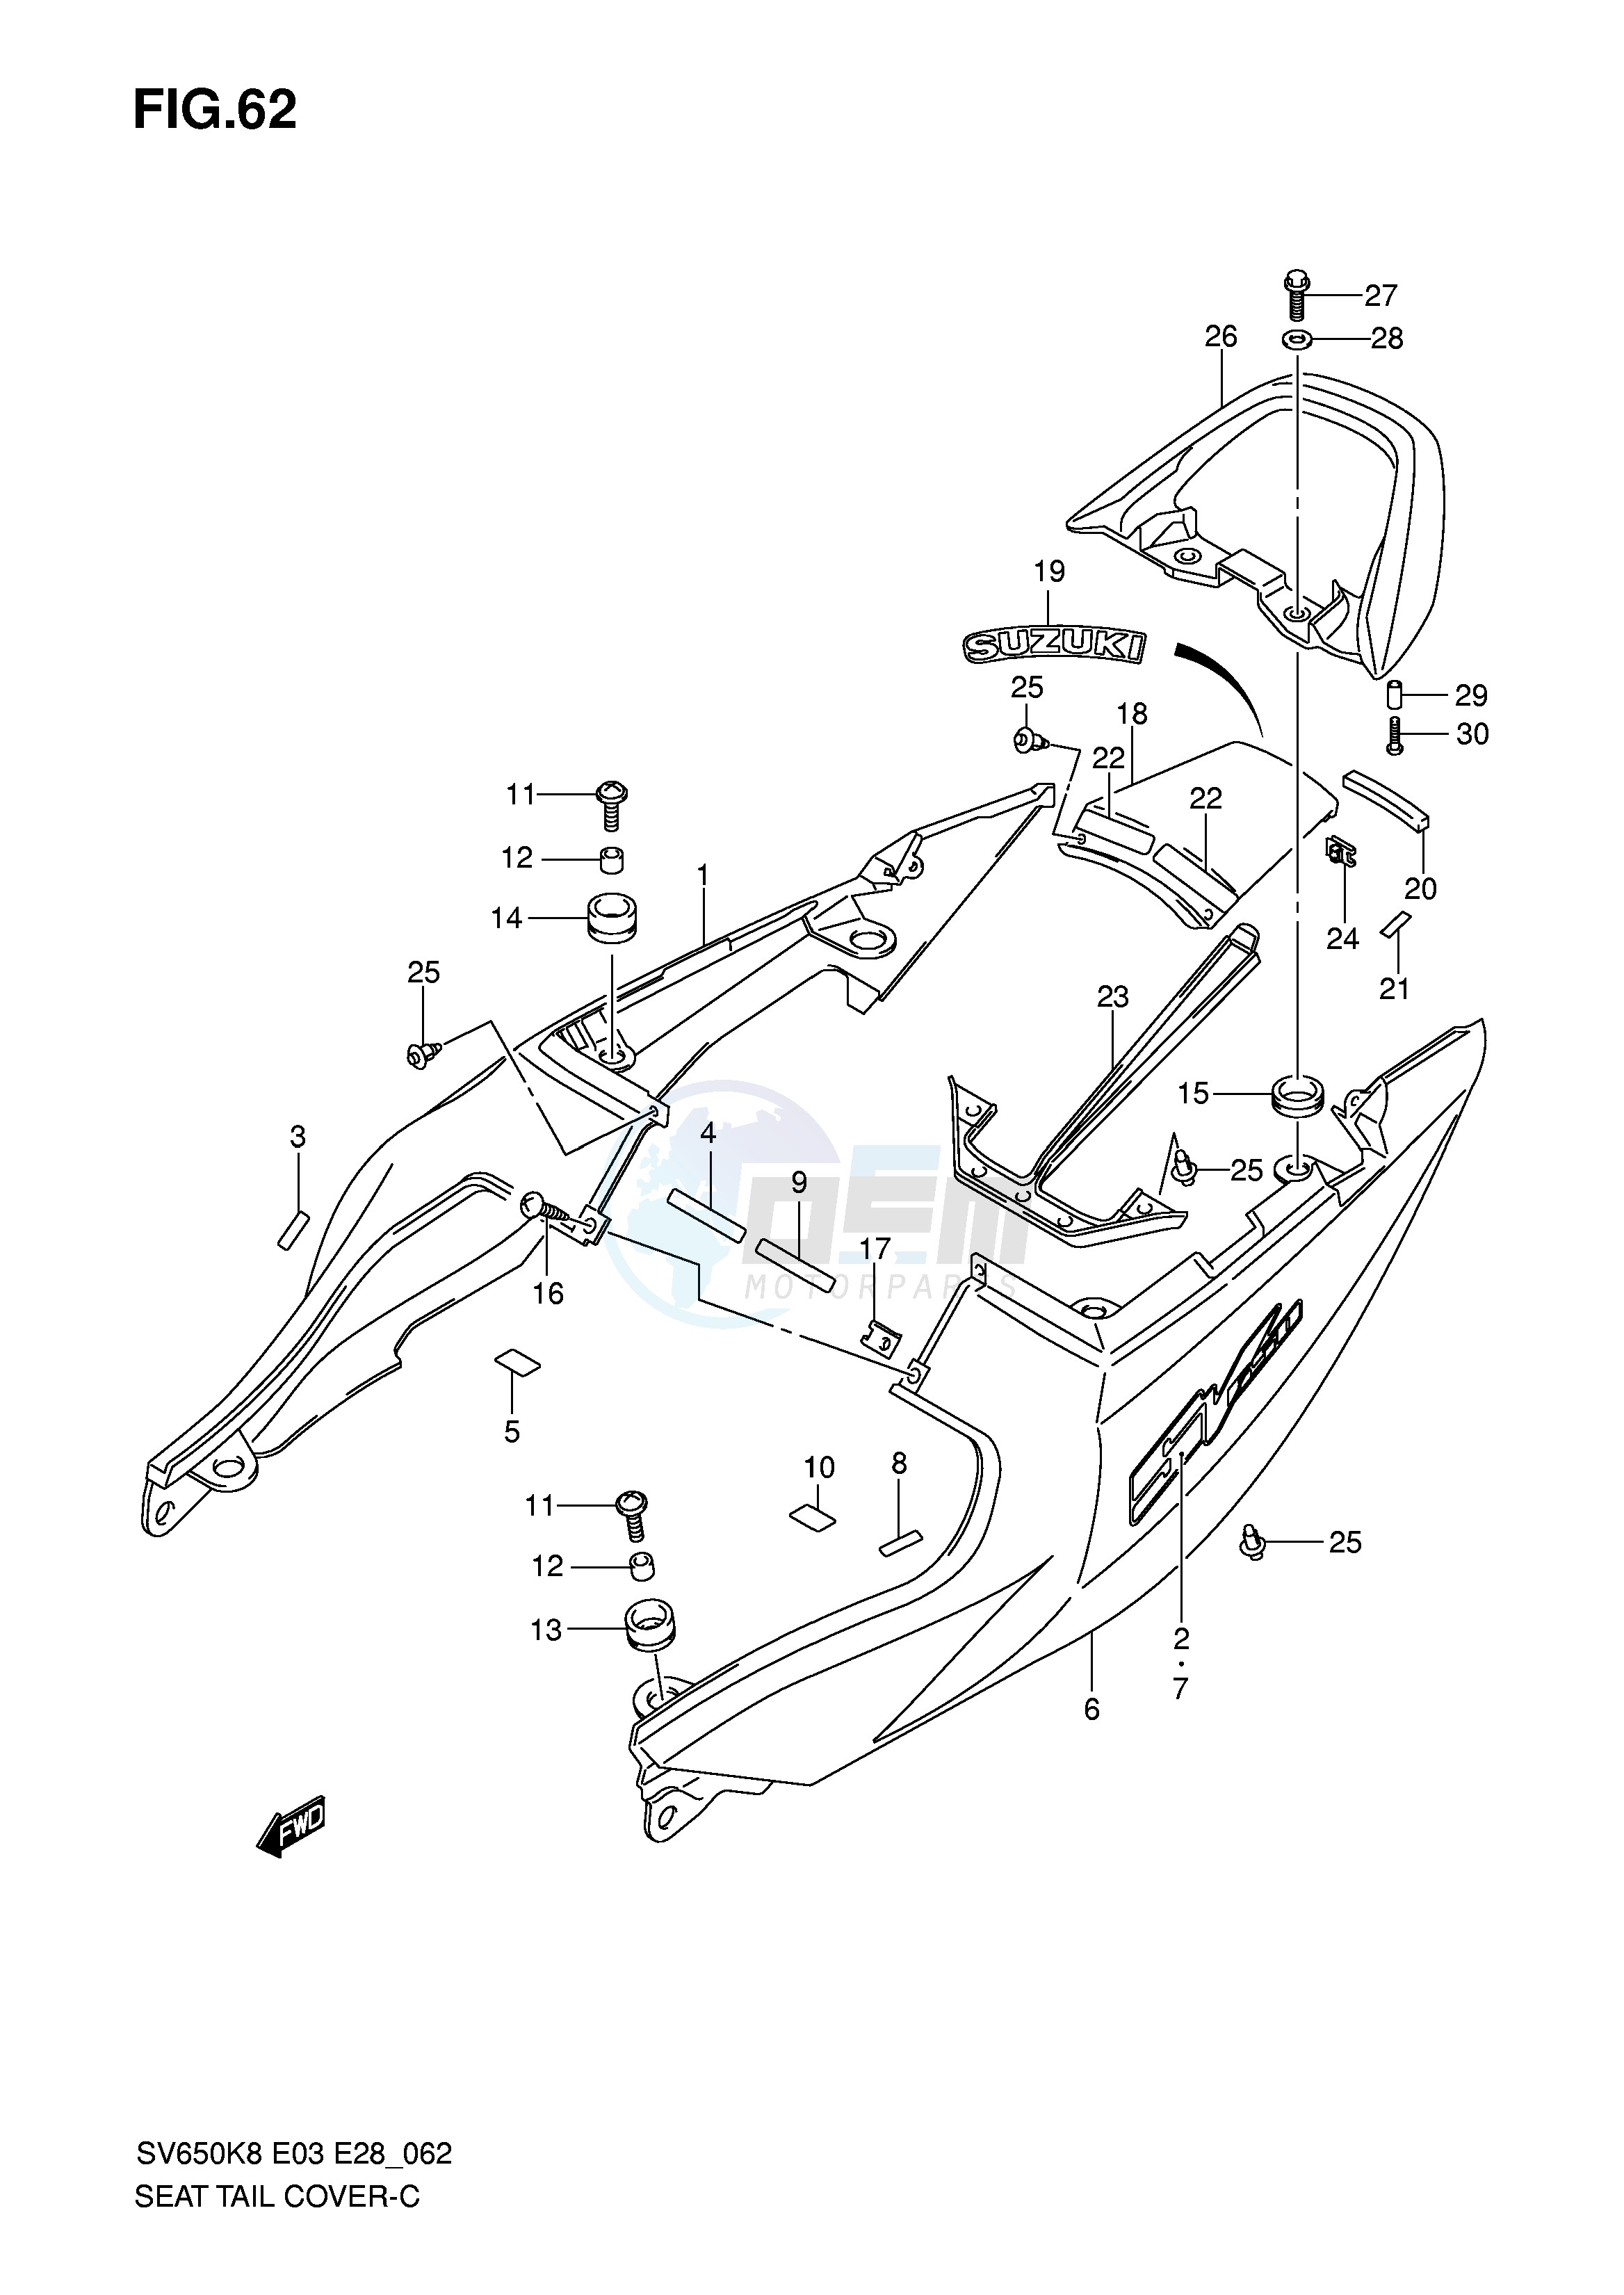 SEAT TAIL COVER (SV650K8 AK8) blueprint